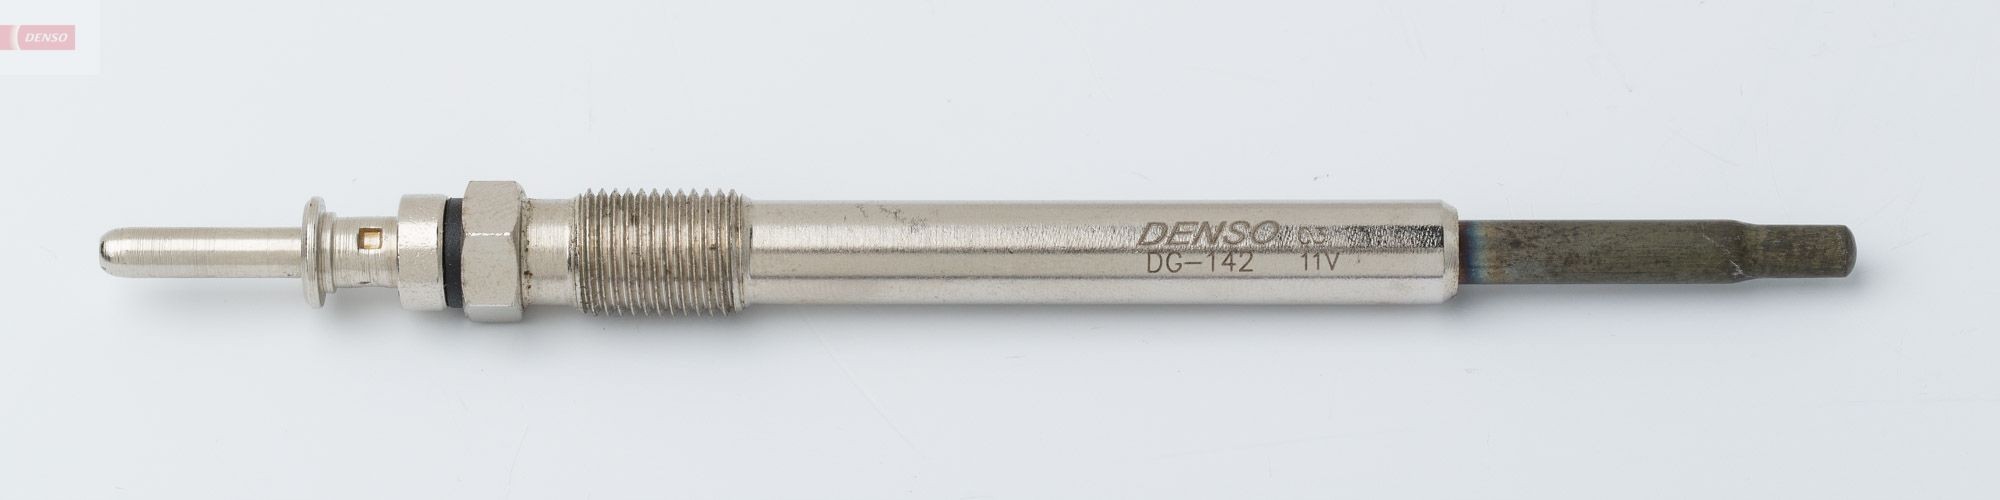 DENSO 11V M10x1.0, Metal glow plug, 135 mm, 10 Nm Total Length: 135mm, Thread Size: M10x1.0 Glow plugs DG-142 buy